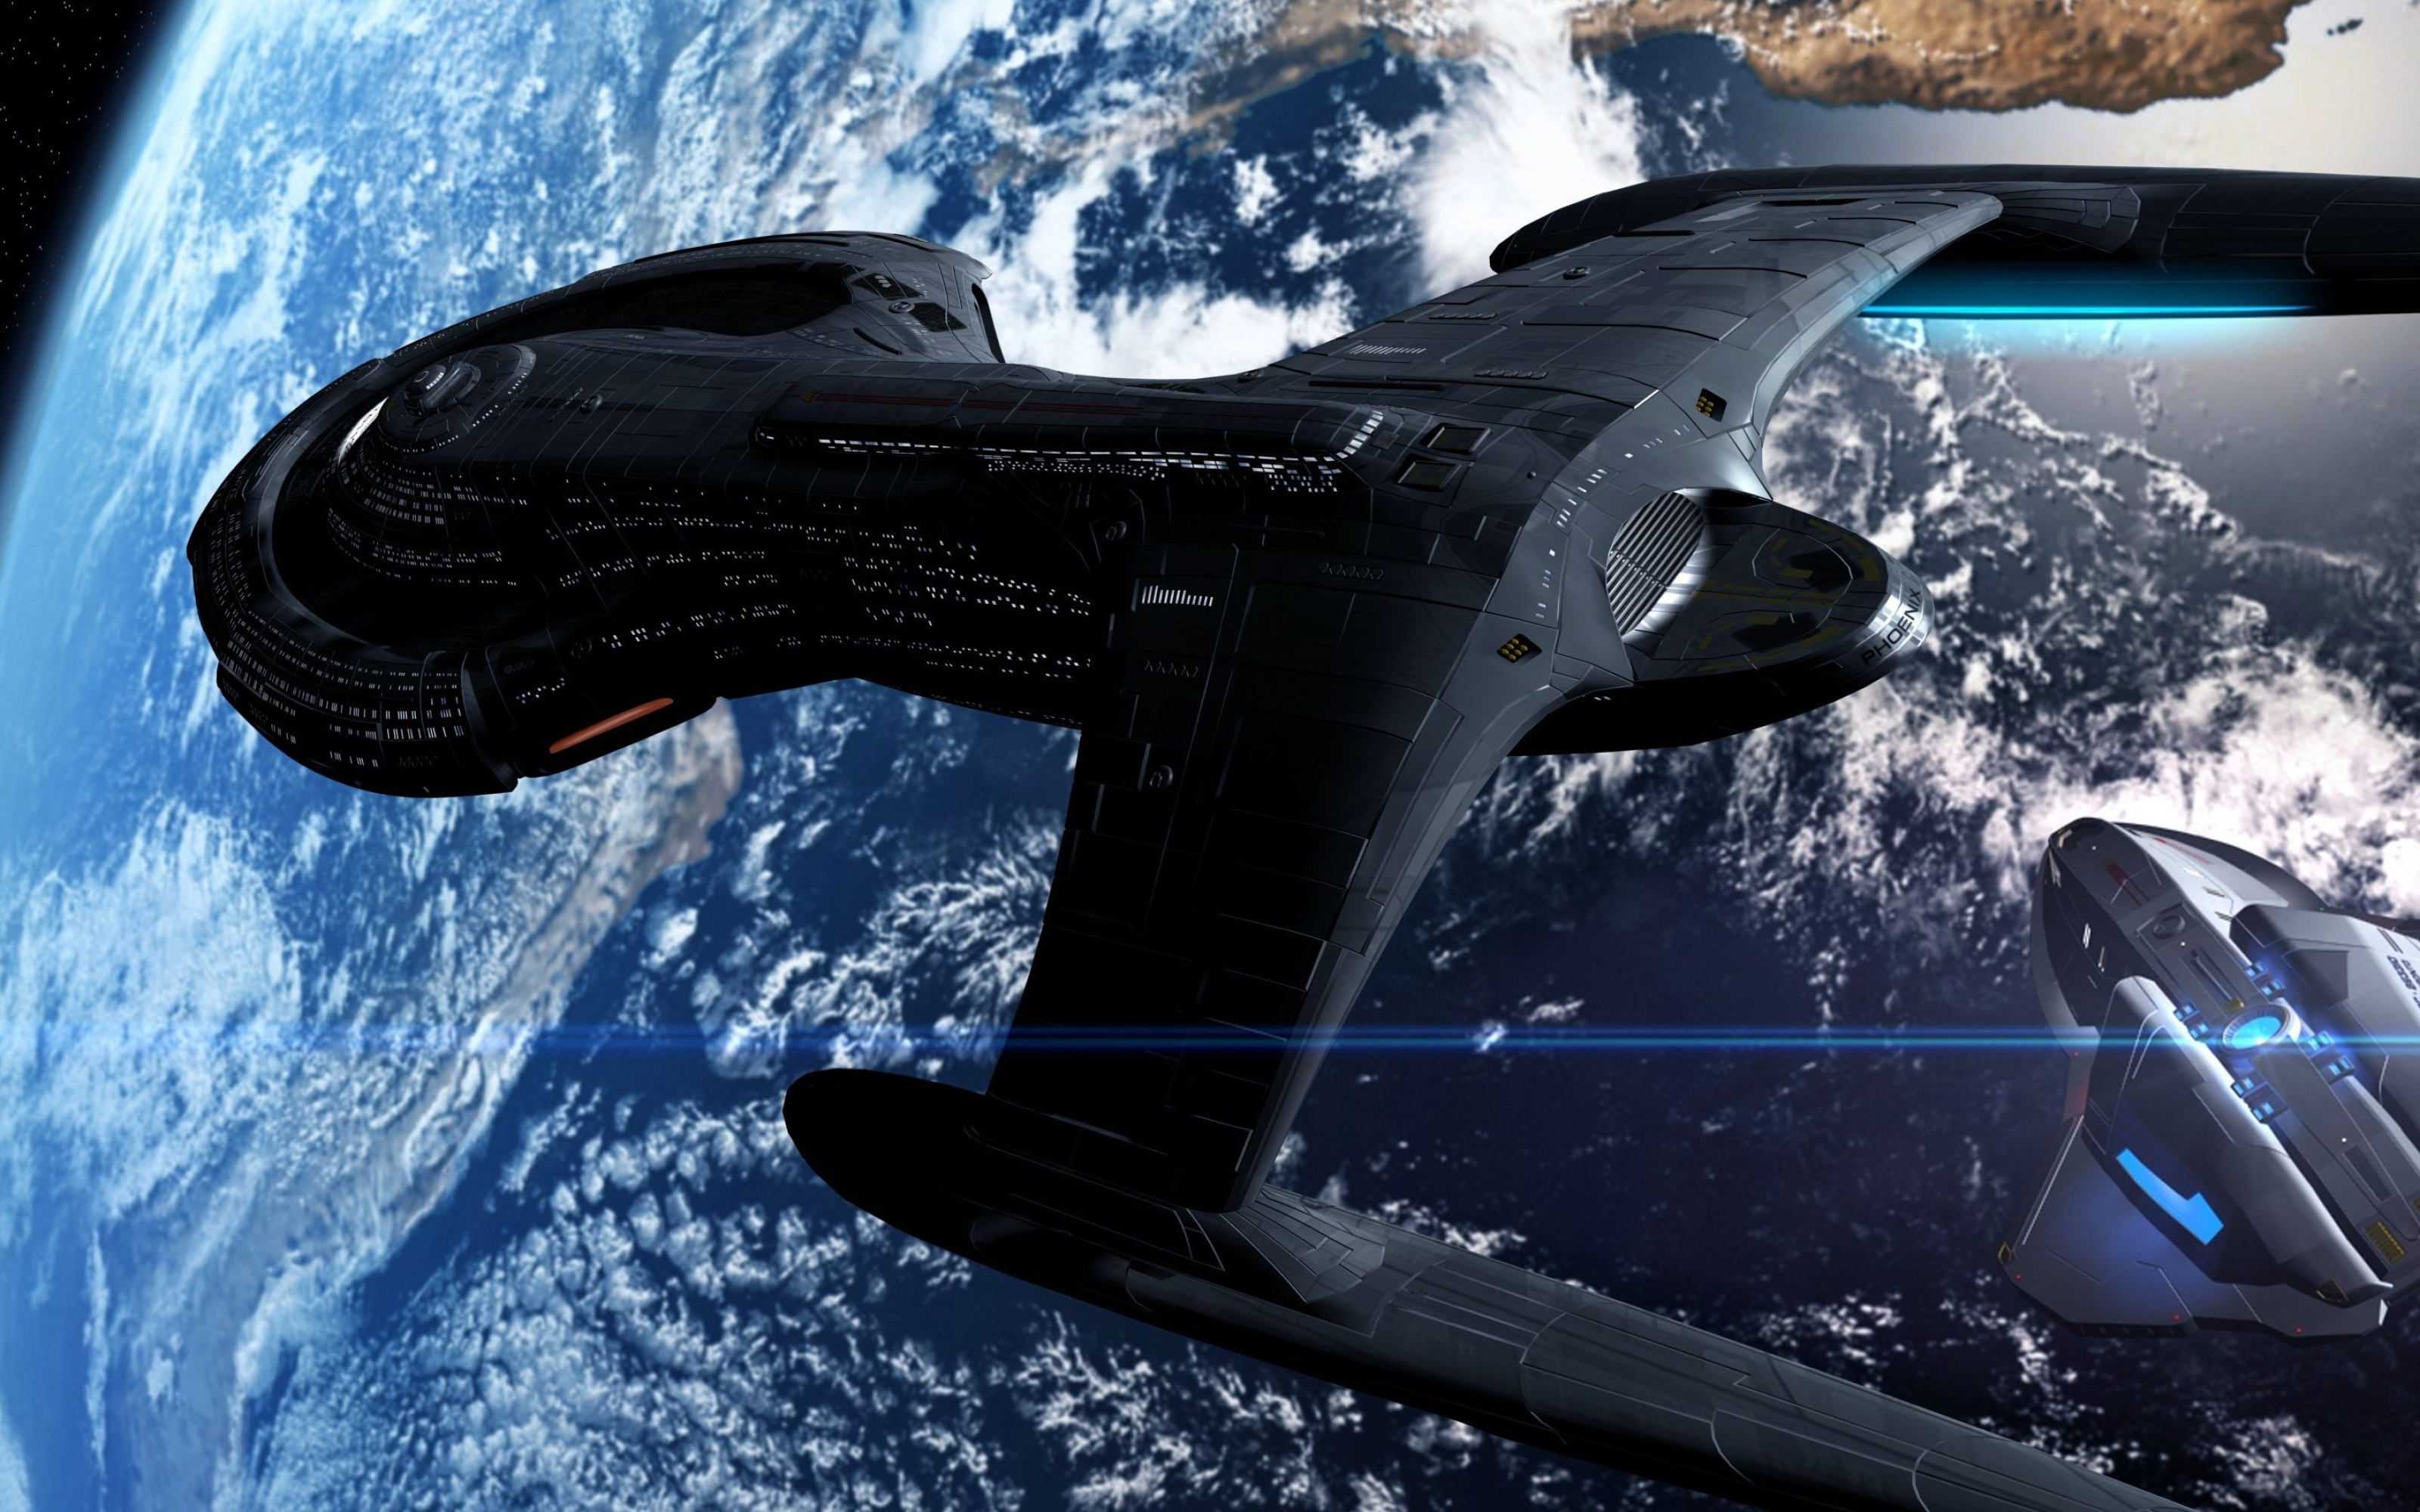 3200x2000 Sci Fi Star Trek Space Science Fiction Scifi Phoenix Starship Wallpaper | Star trek show, Star trek images, Star trek ships